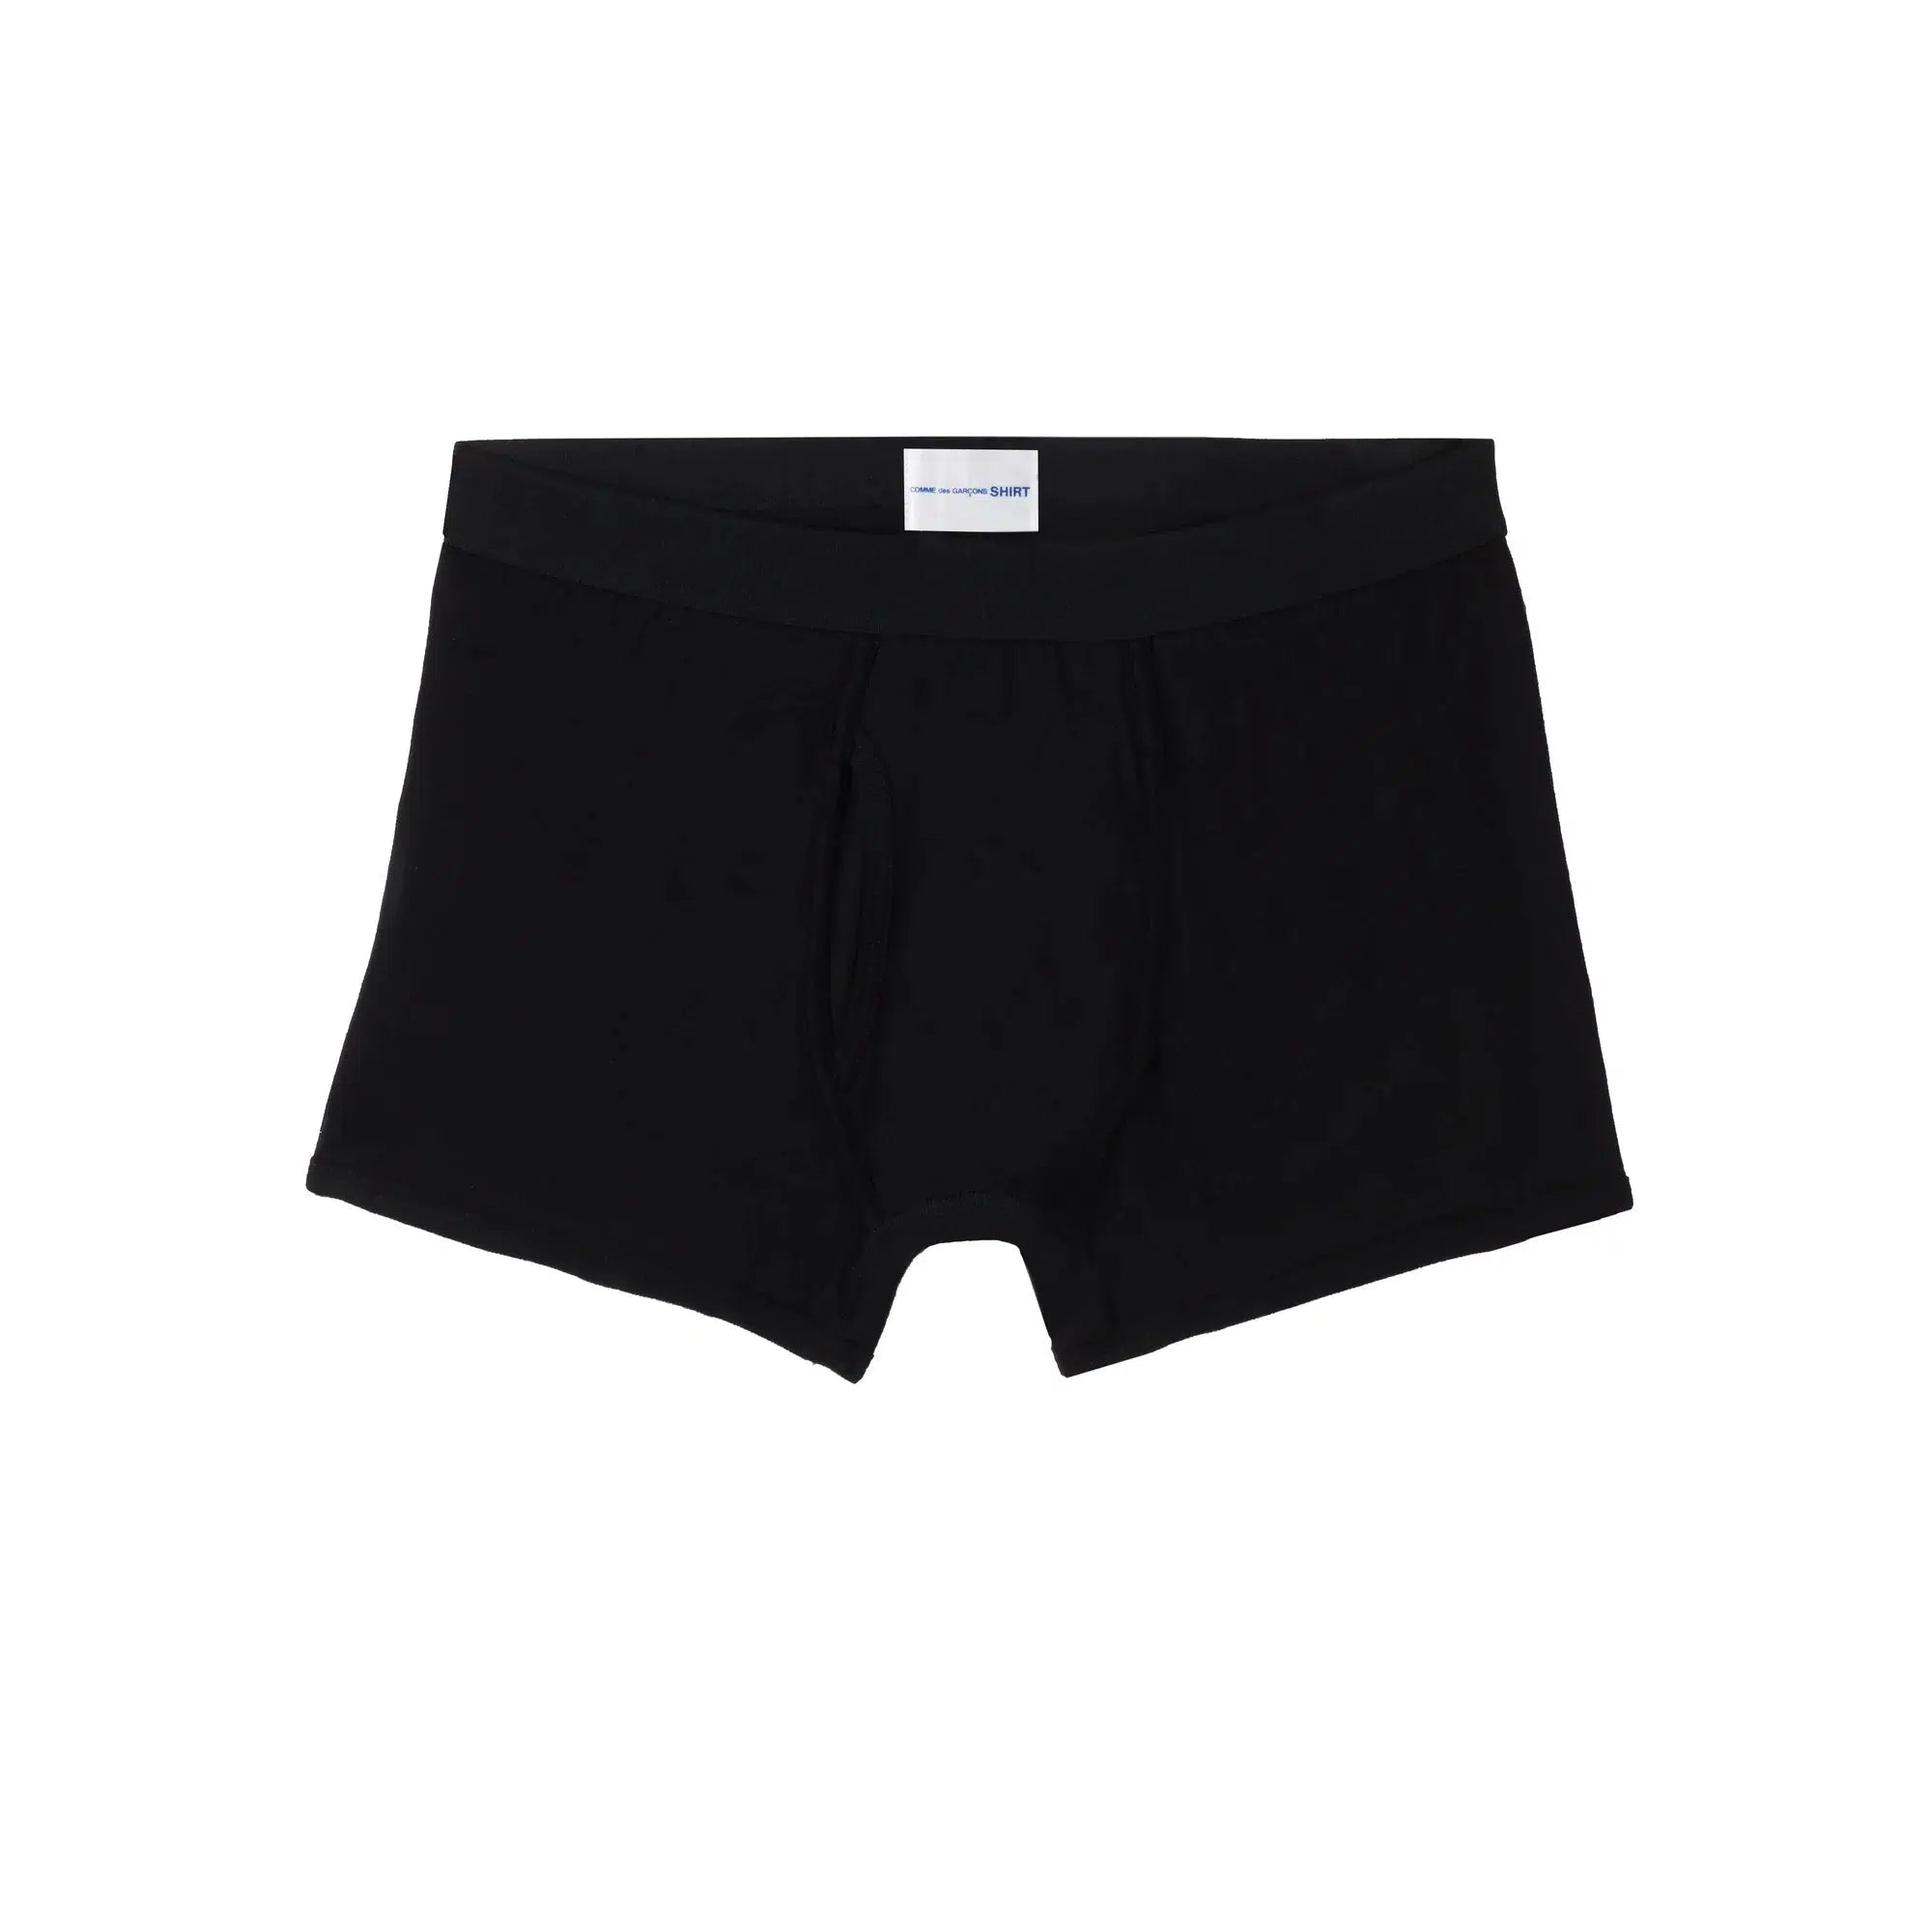 Comme des Garçons Shirt x Sunspel Boxers - Black-Comme des Garçons Shirt-W2 Store